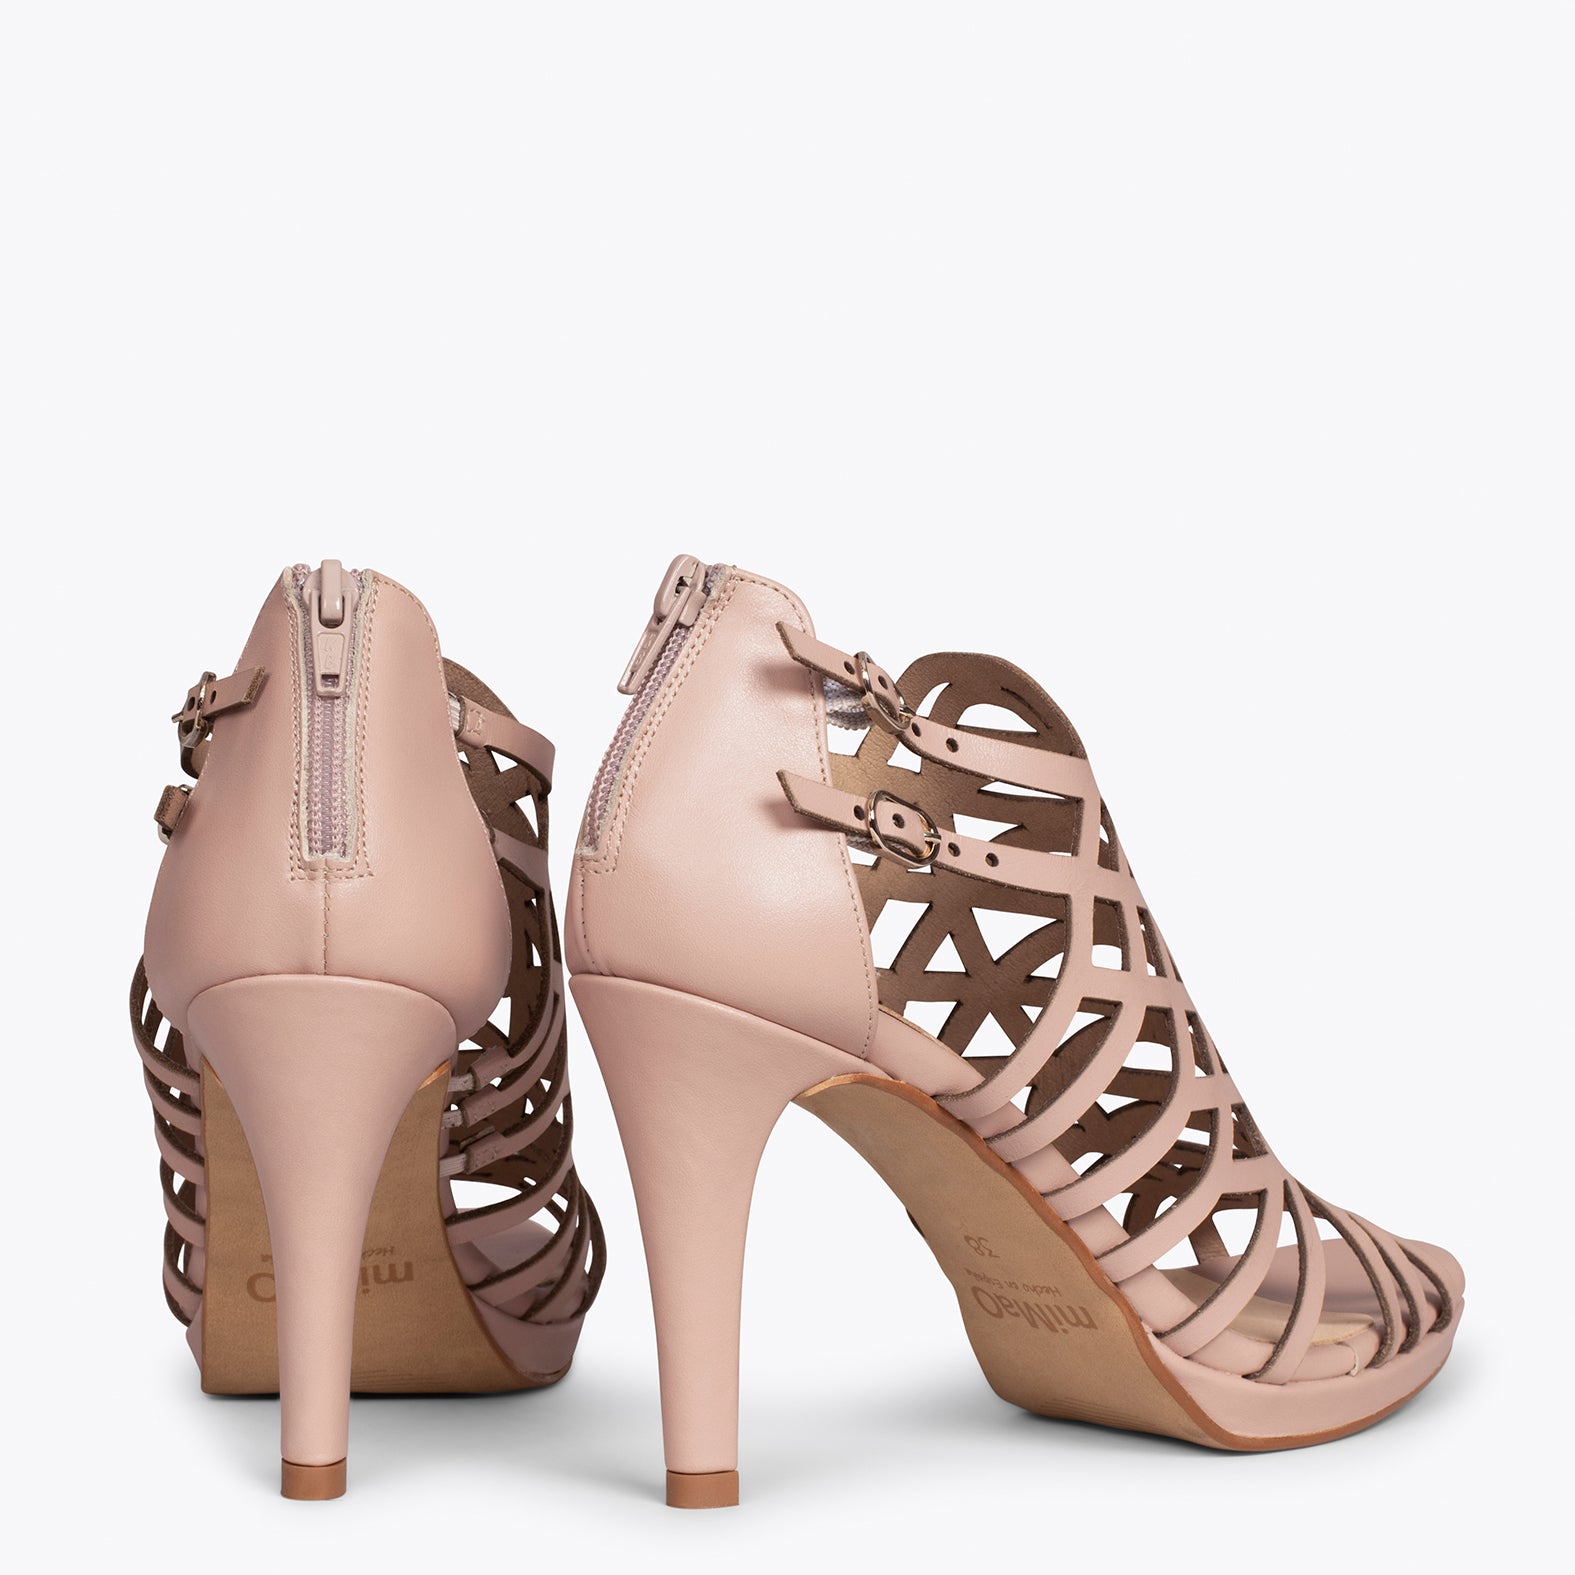 GALA – NUDE high heel party sandals